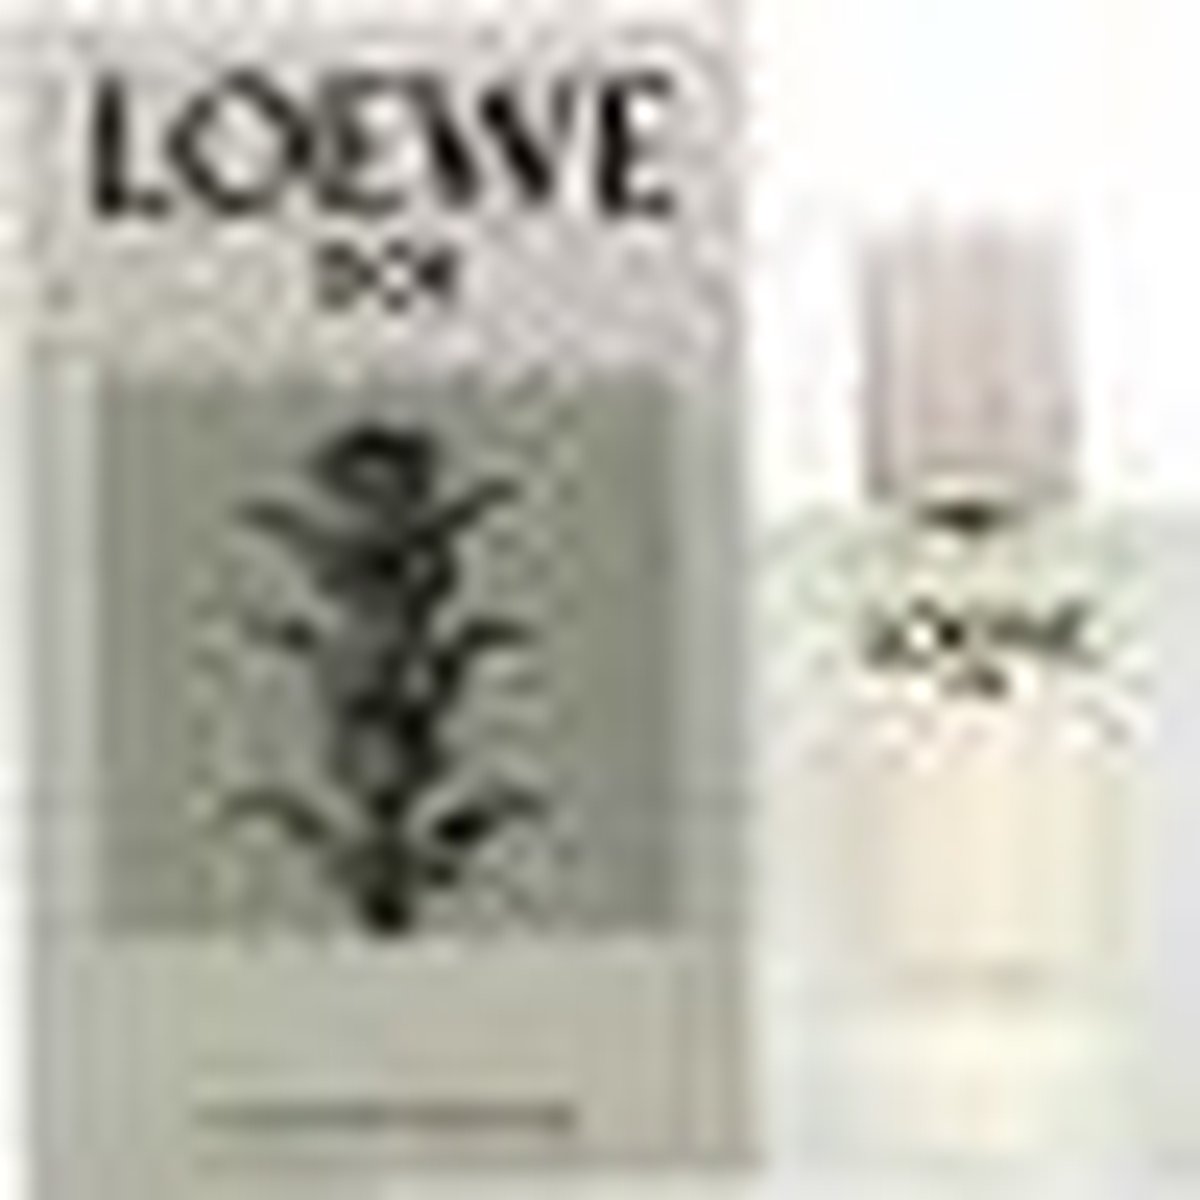 Loewe 001 Eau de Cologne 30ml Spray